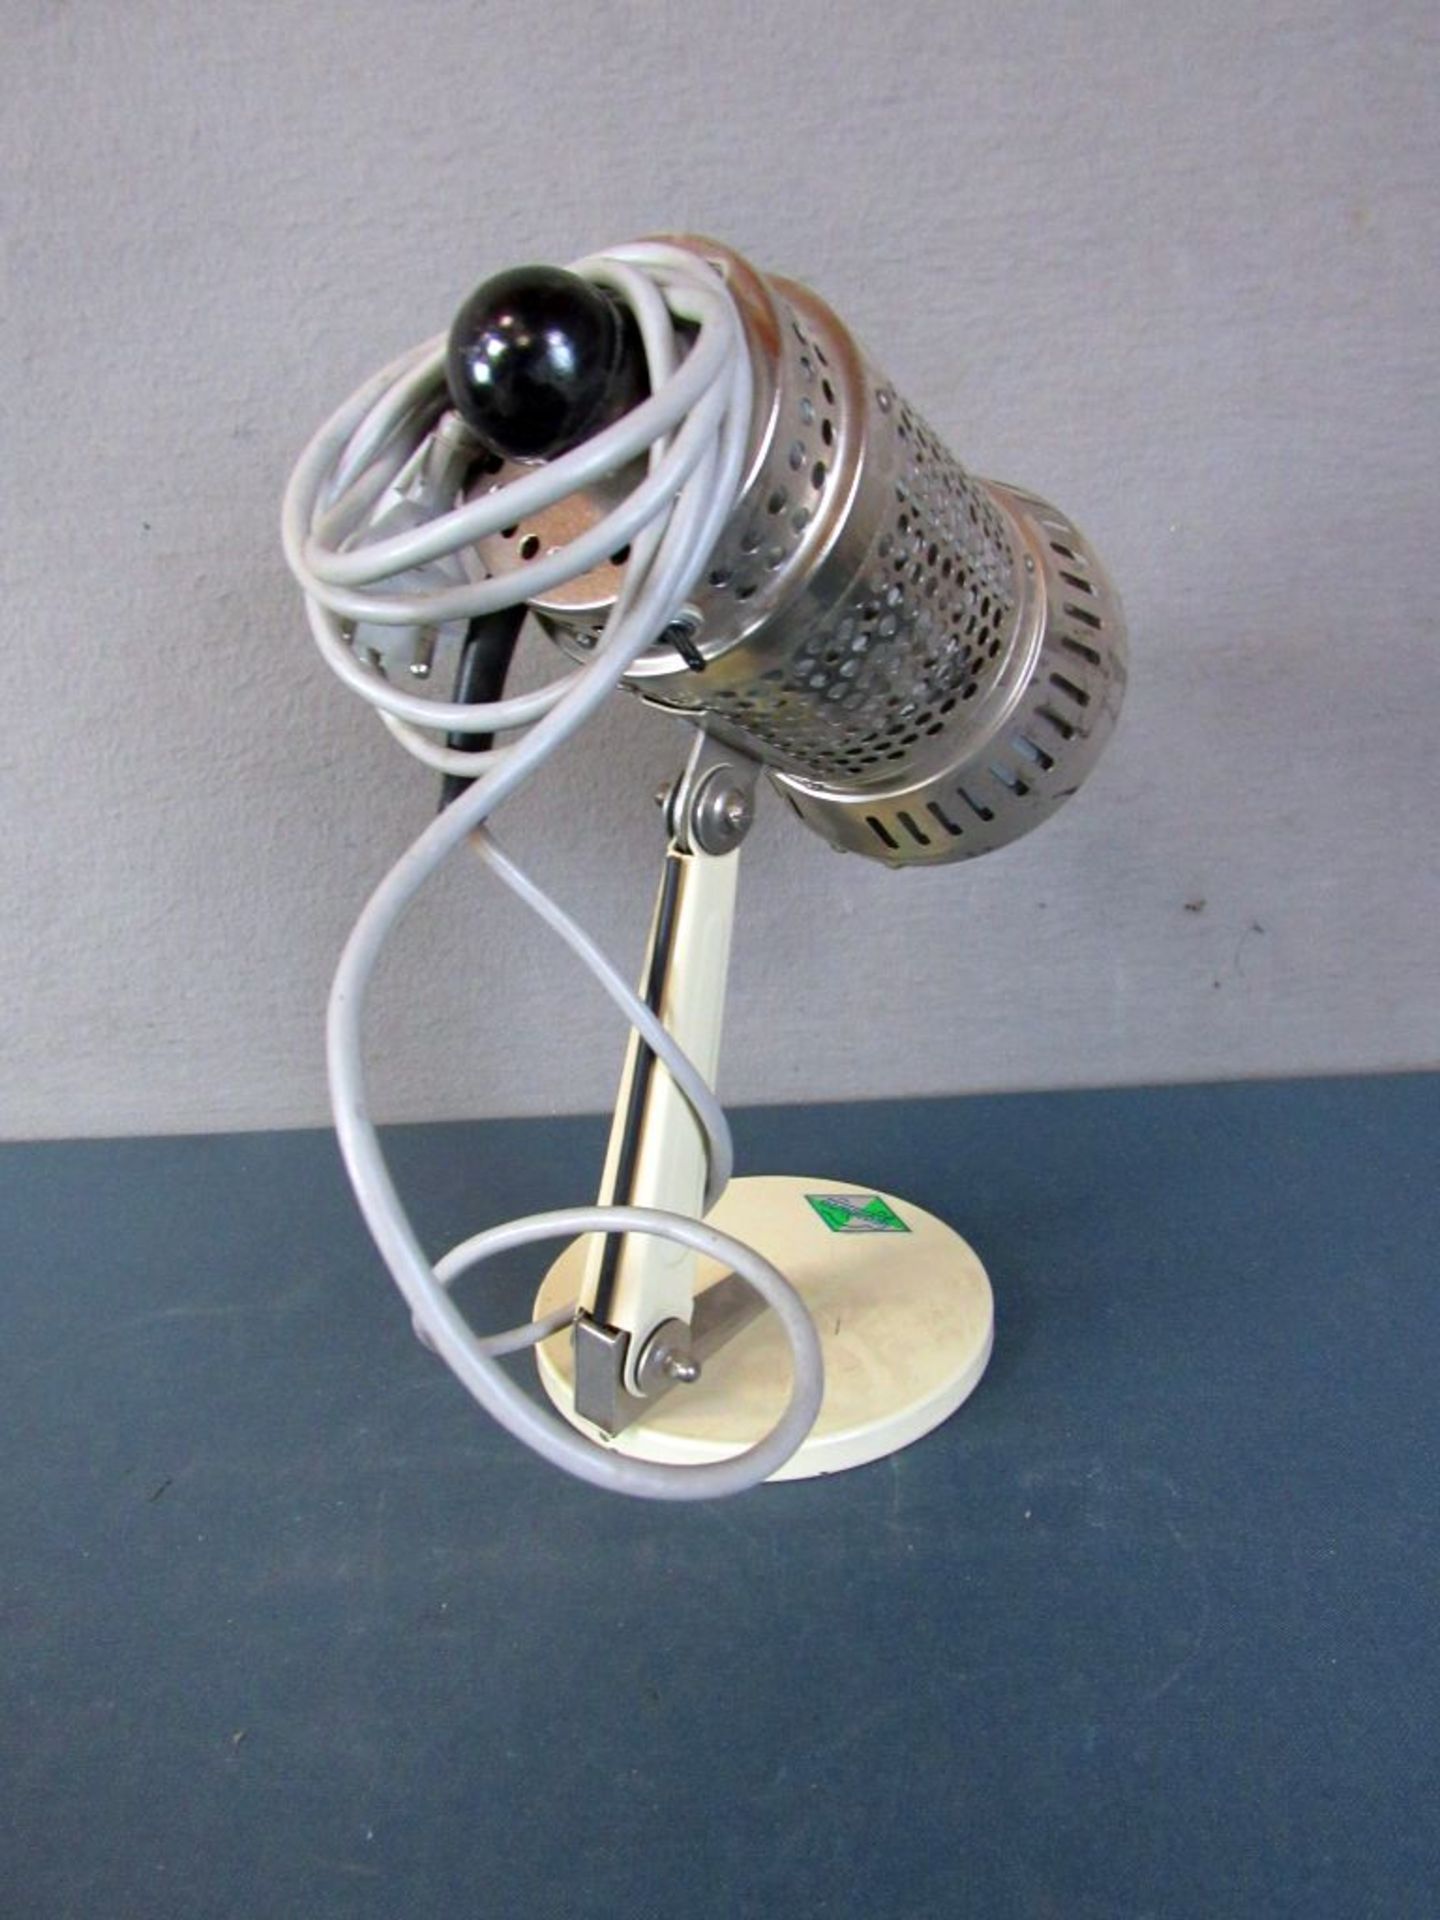 Vintage Art Deco Tischlampe Arztlampe - Image 5 of 5